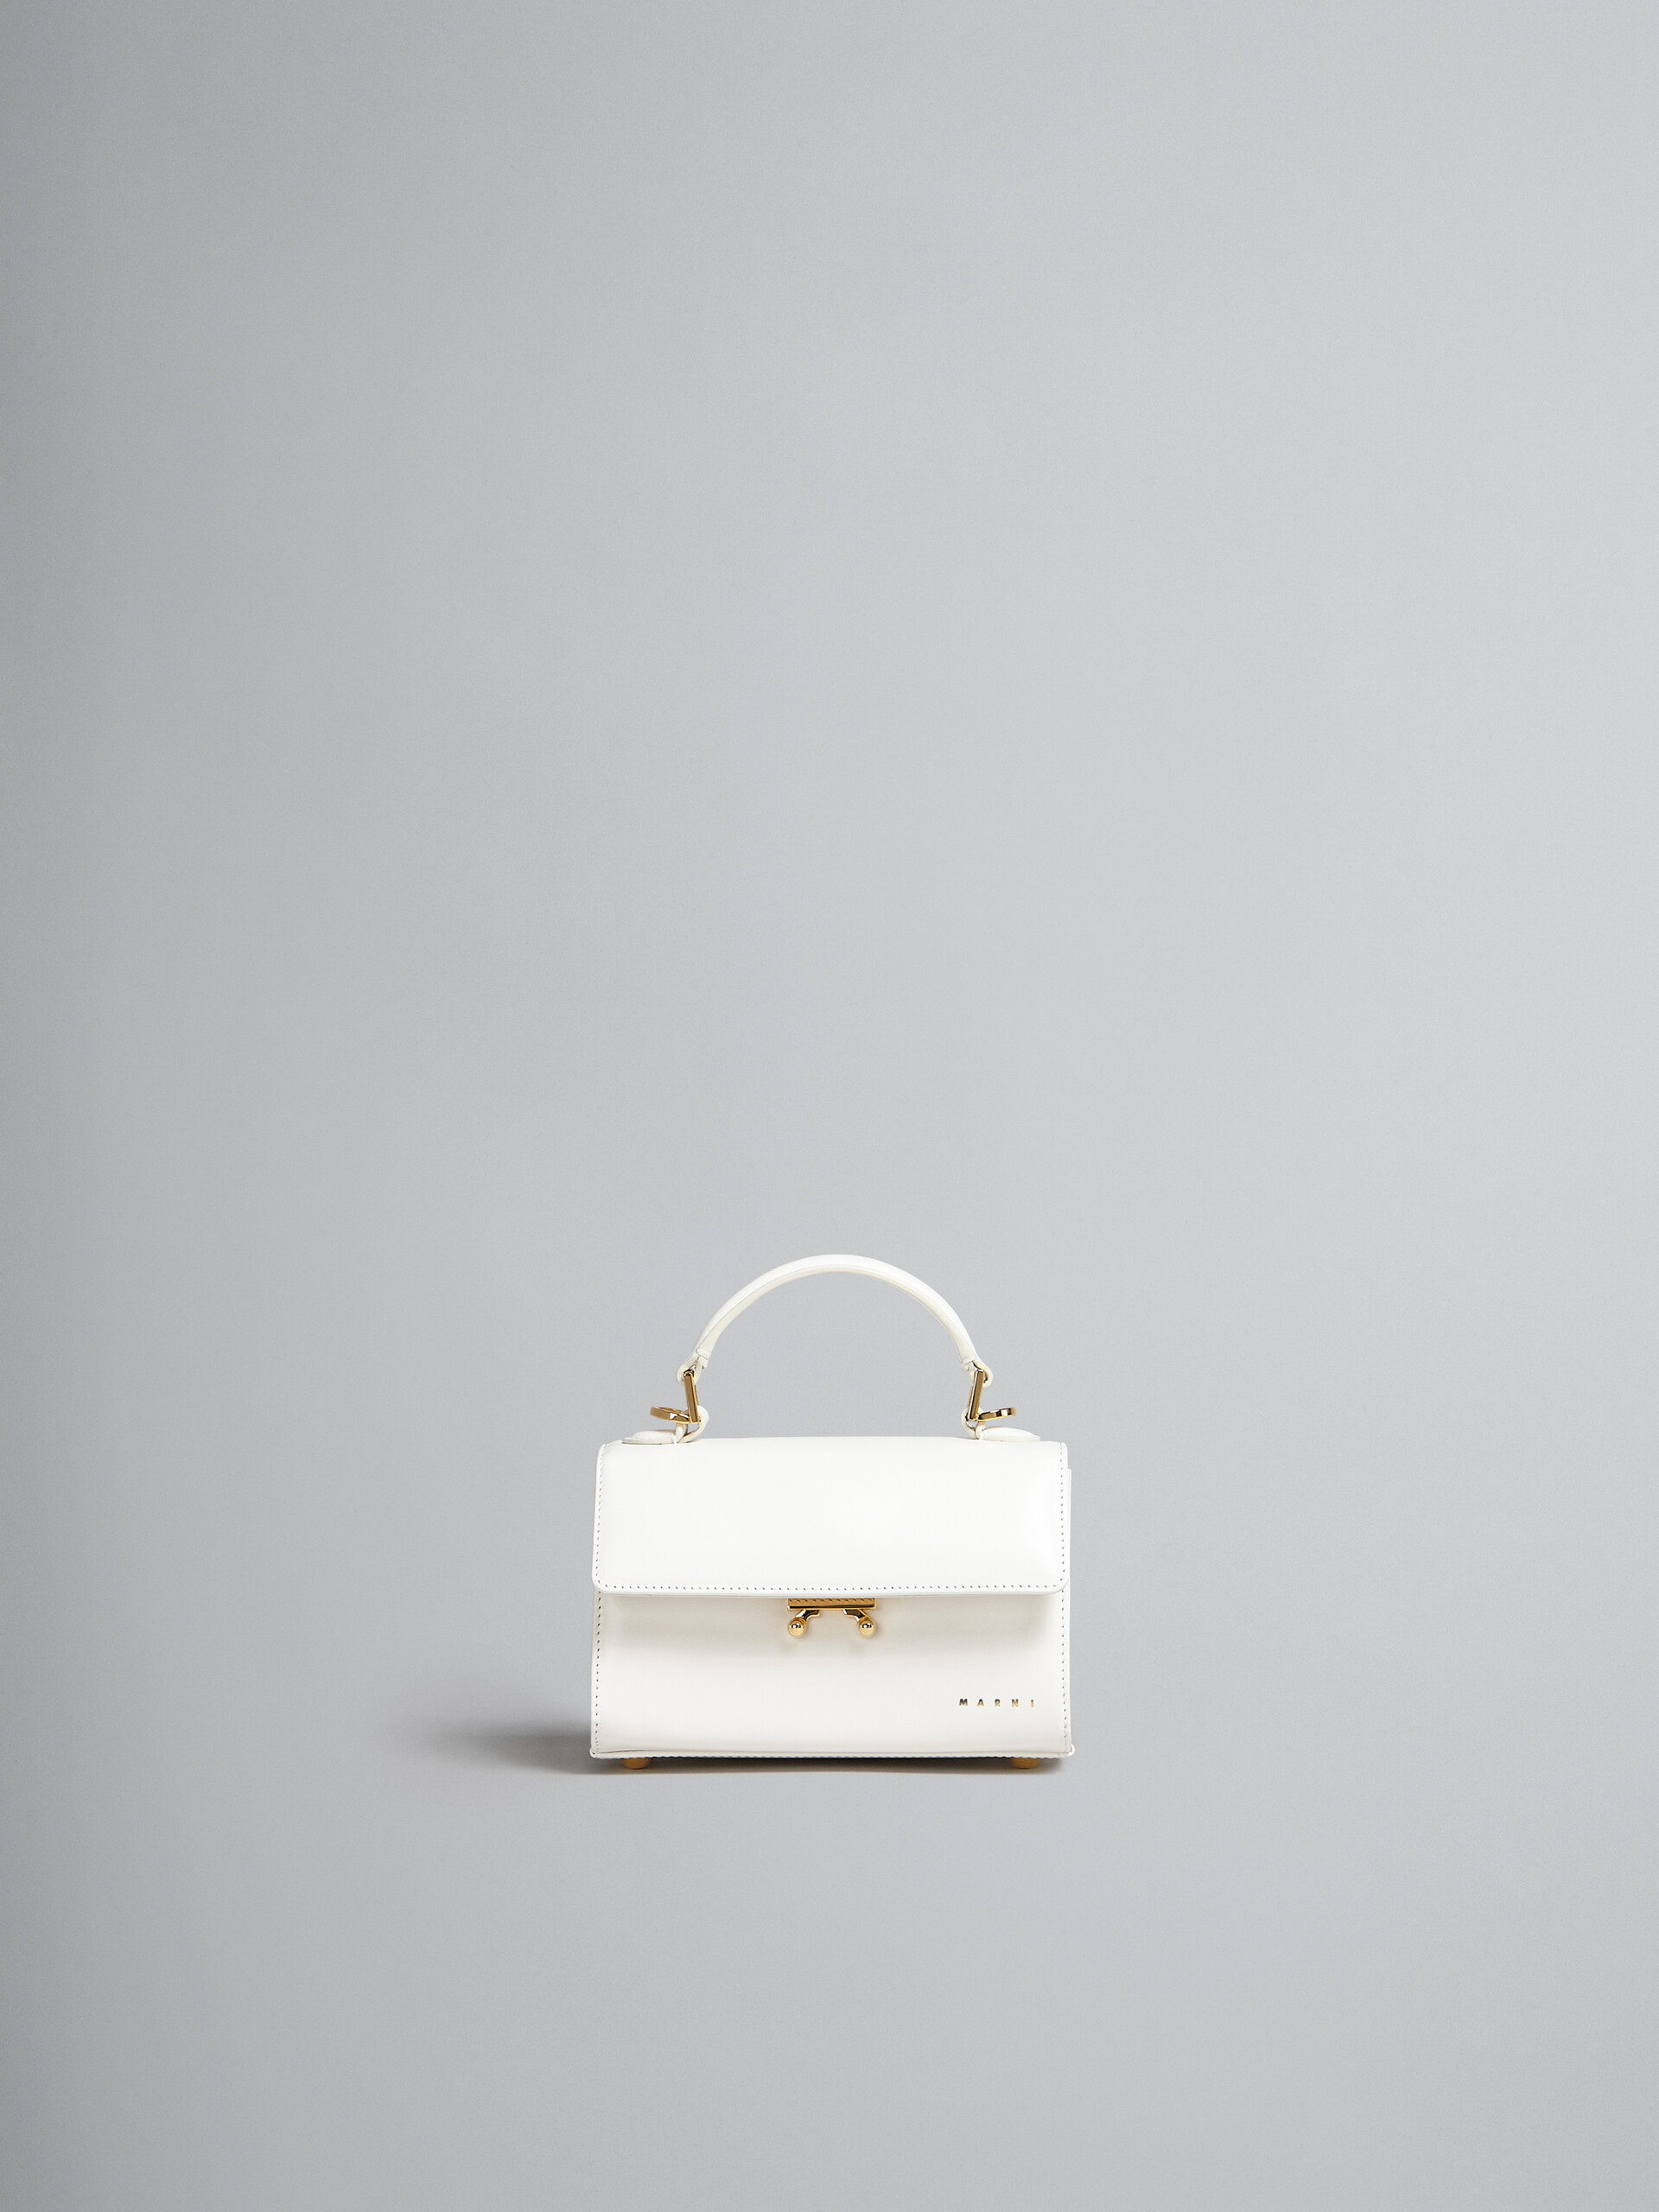 Relativity Mini Bag in white leather - Handbags - Image 1